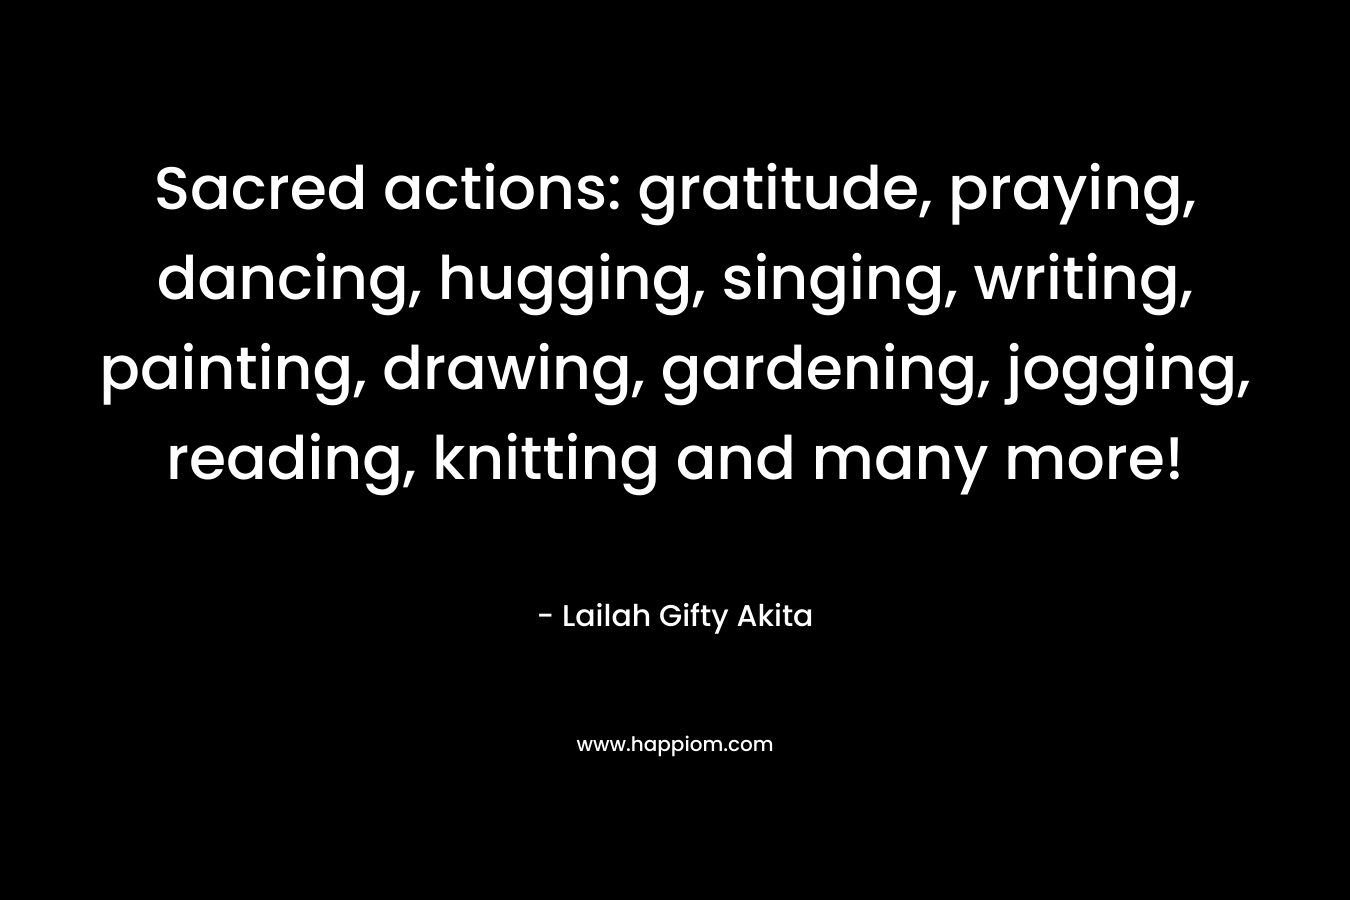 Sacred actions: gratitude, praying, dancing, hugging, singing, writing, painting, drawing, gardening, jogging, reading, knitting and many more!